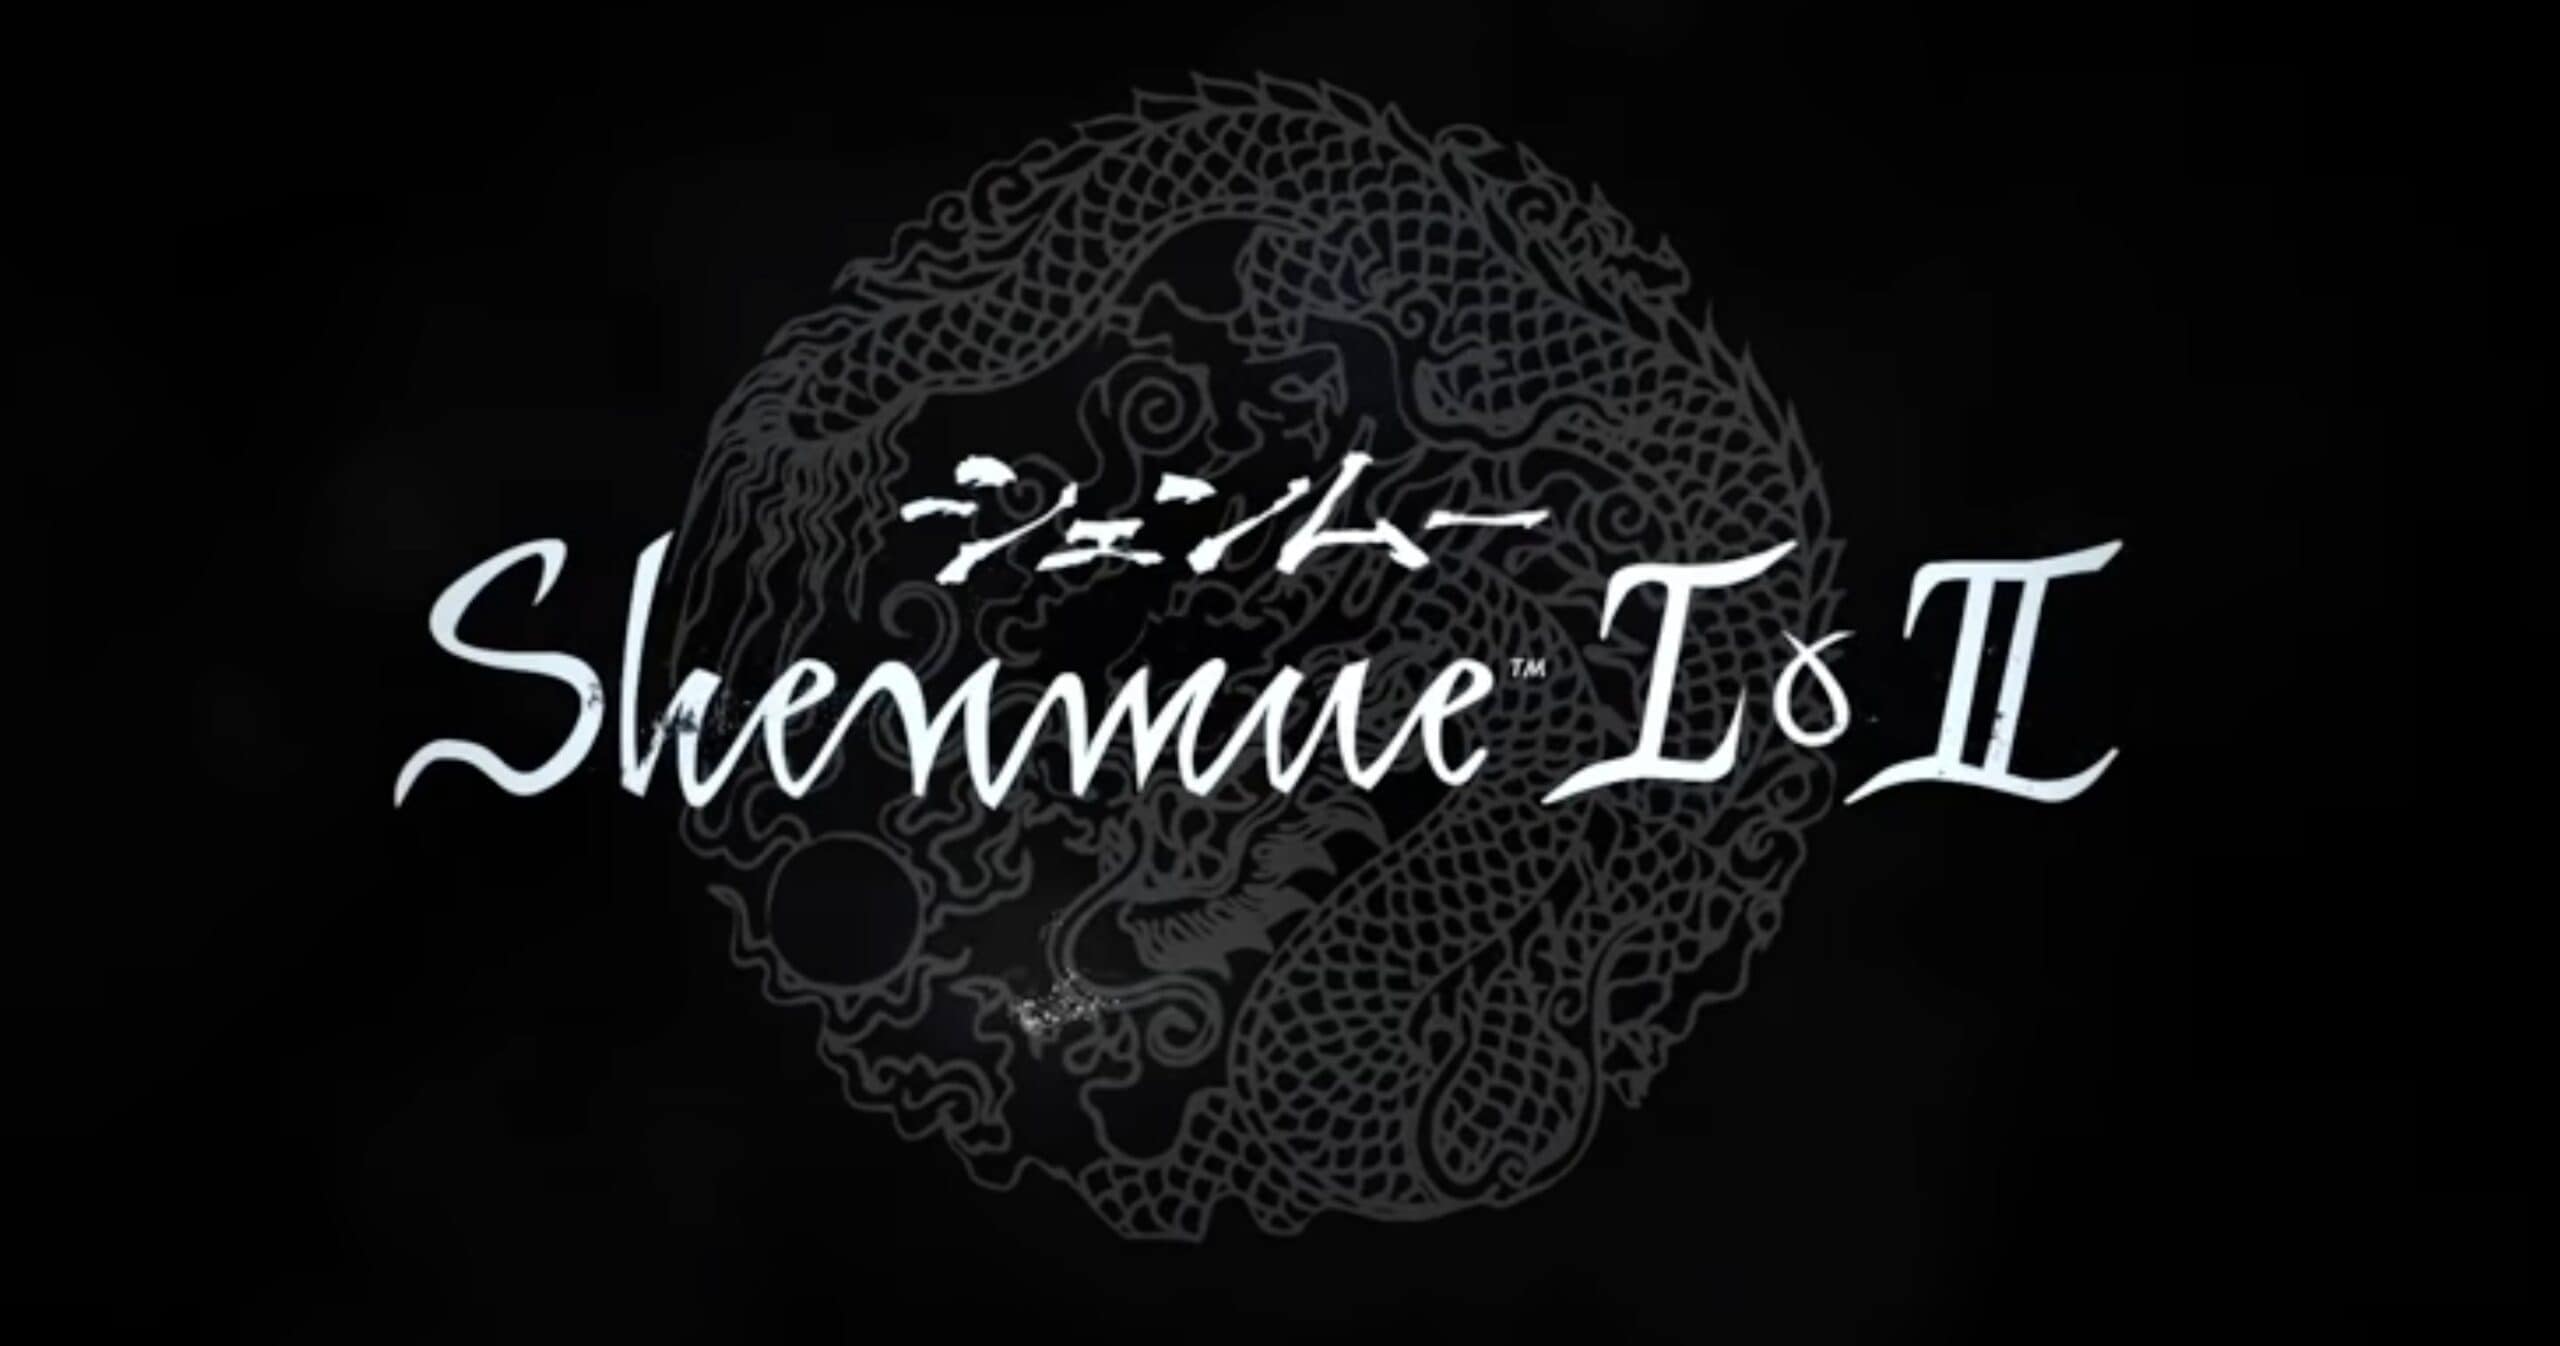 Shenmue 1 & 2 logo